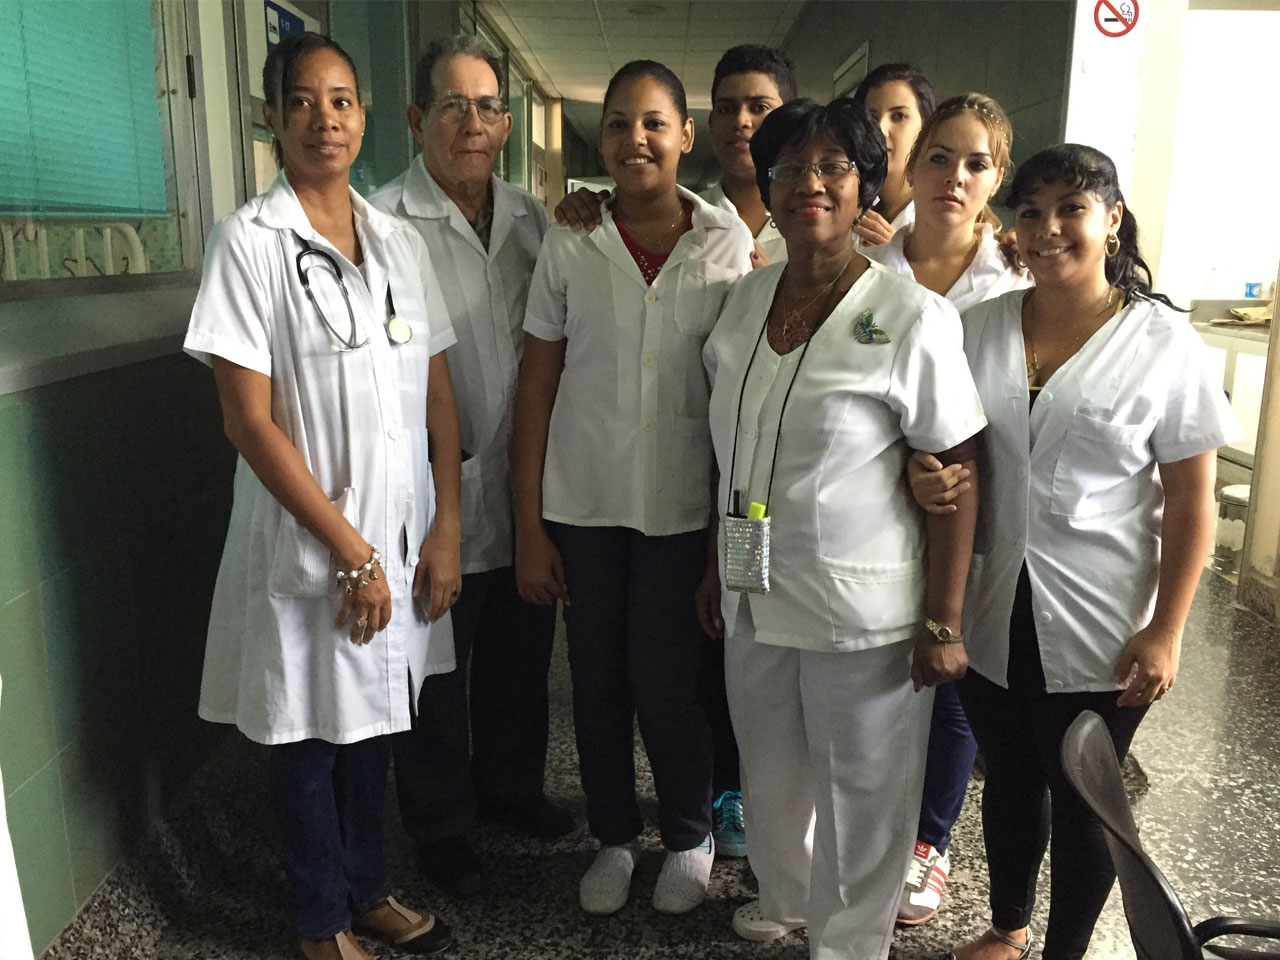 Pediatric nurses in a hospital, Habana, Cuba